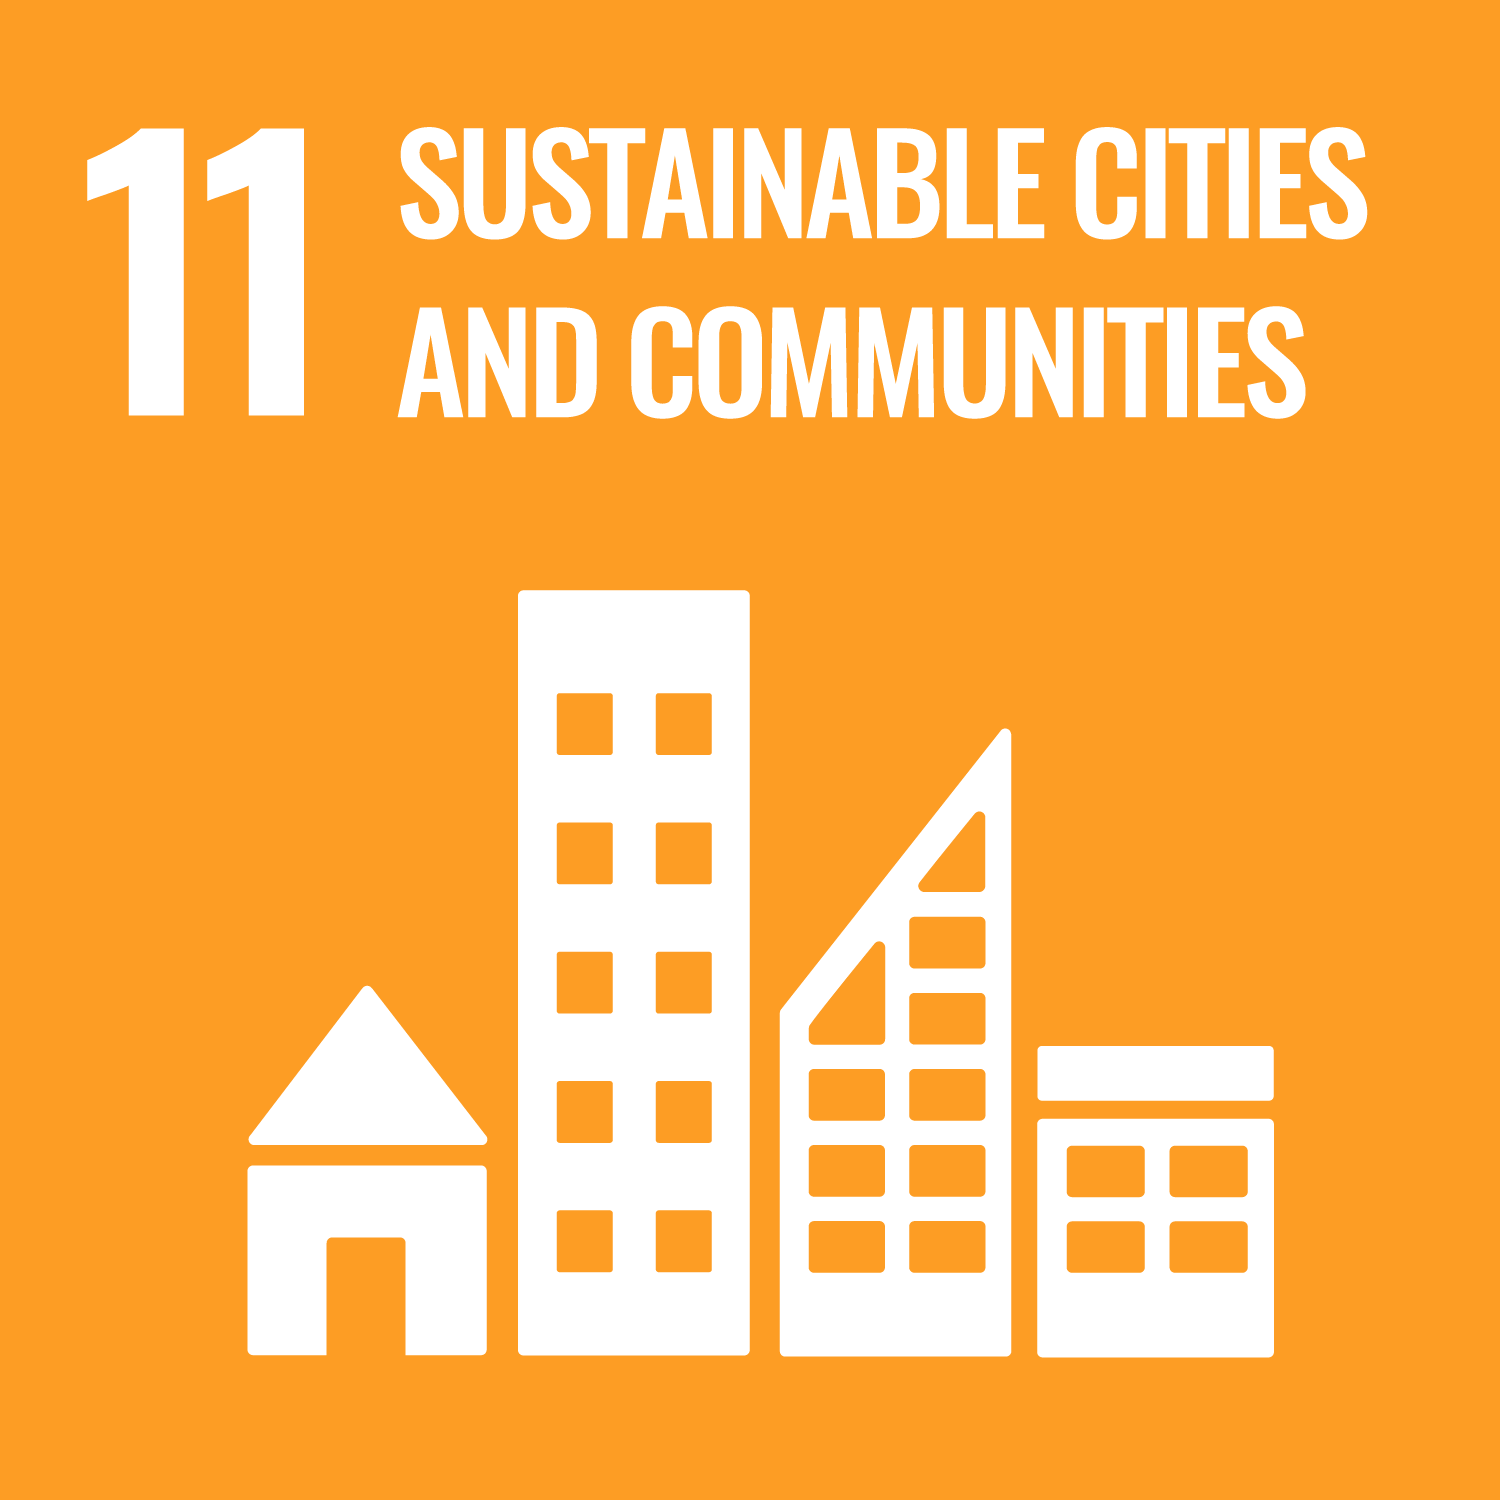 United National Sustainable Development Goals logo for 11